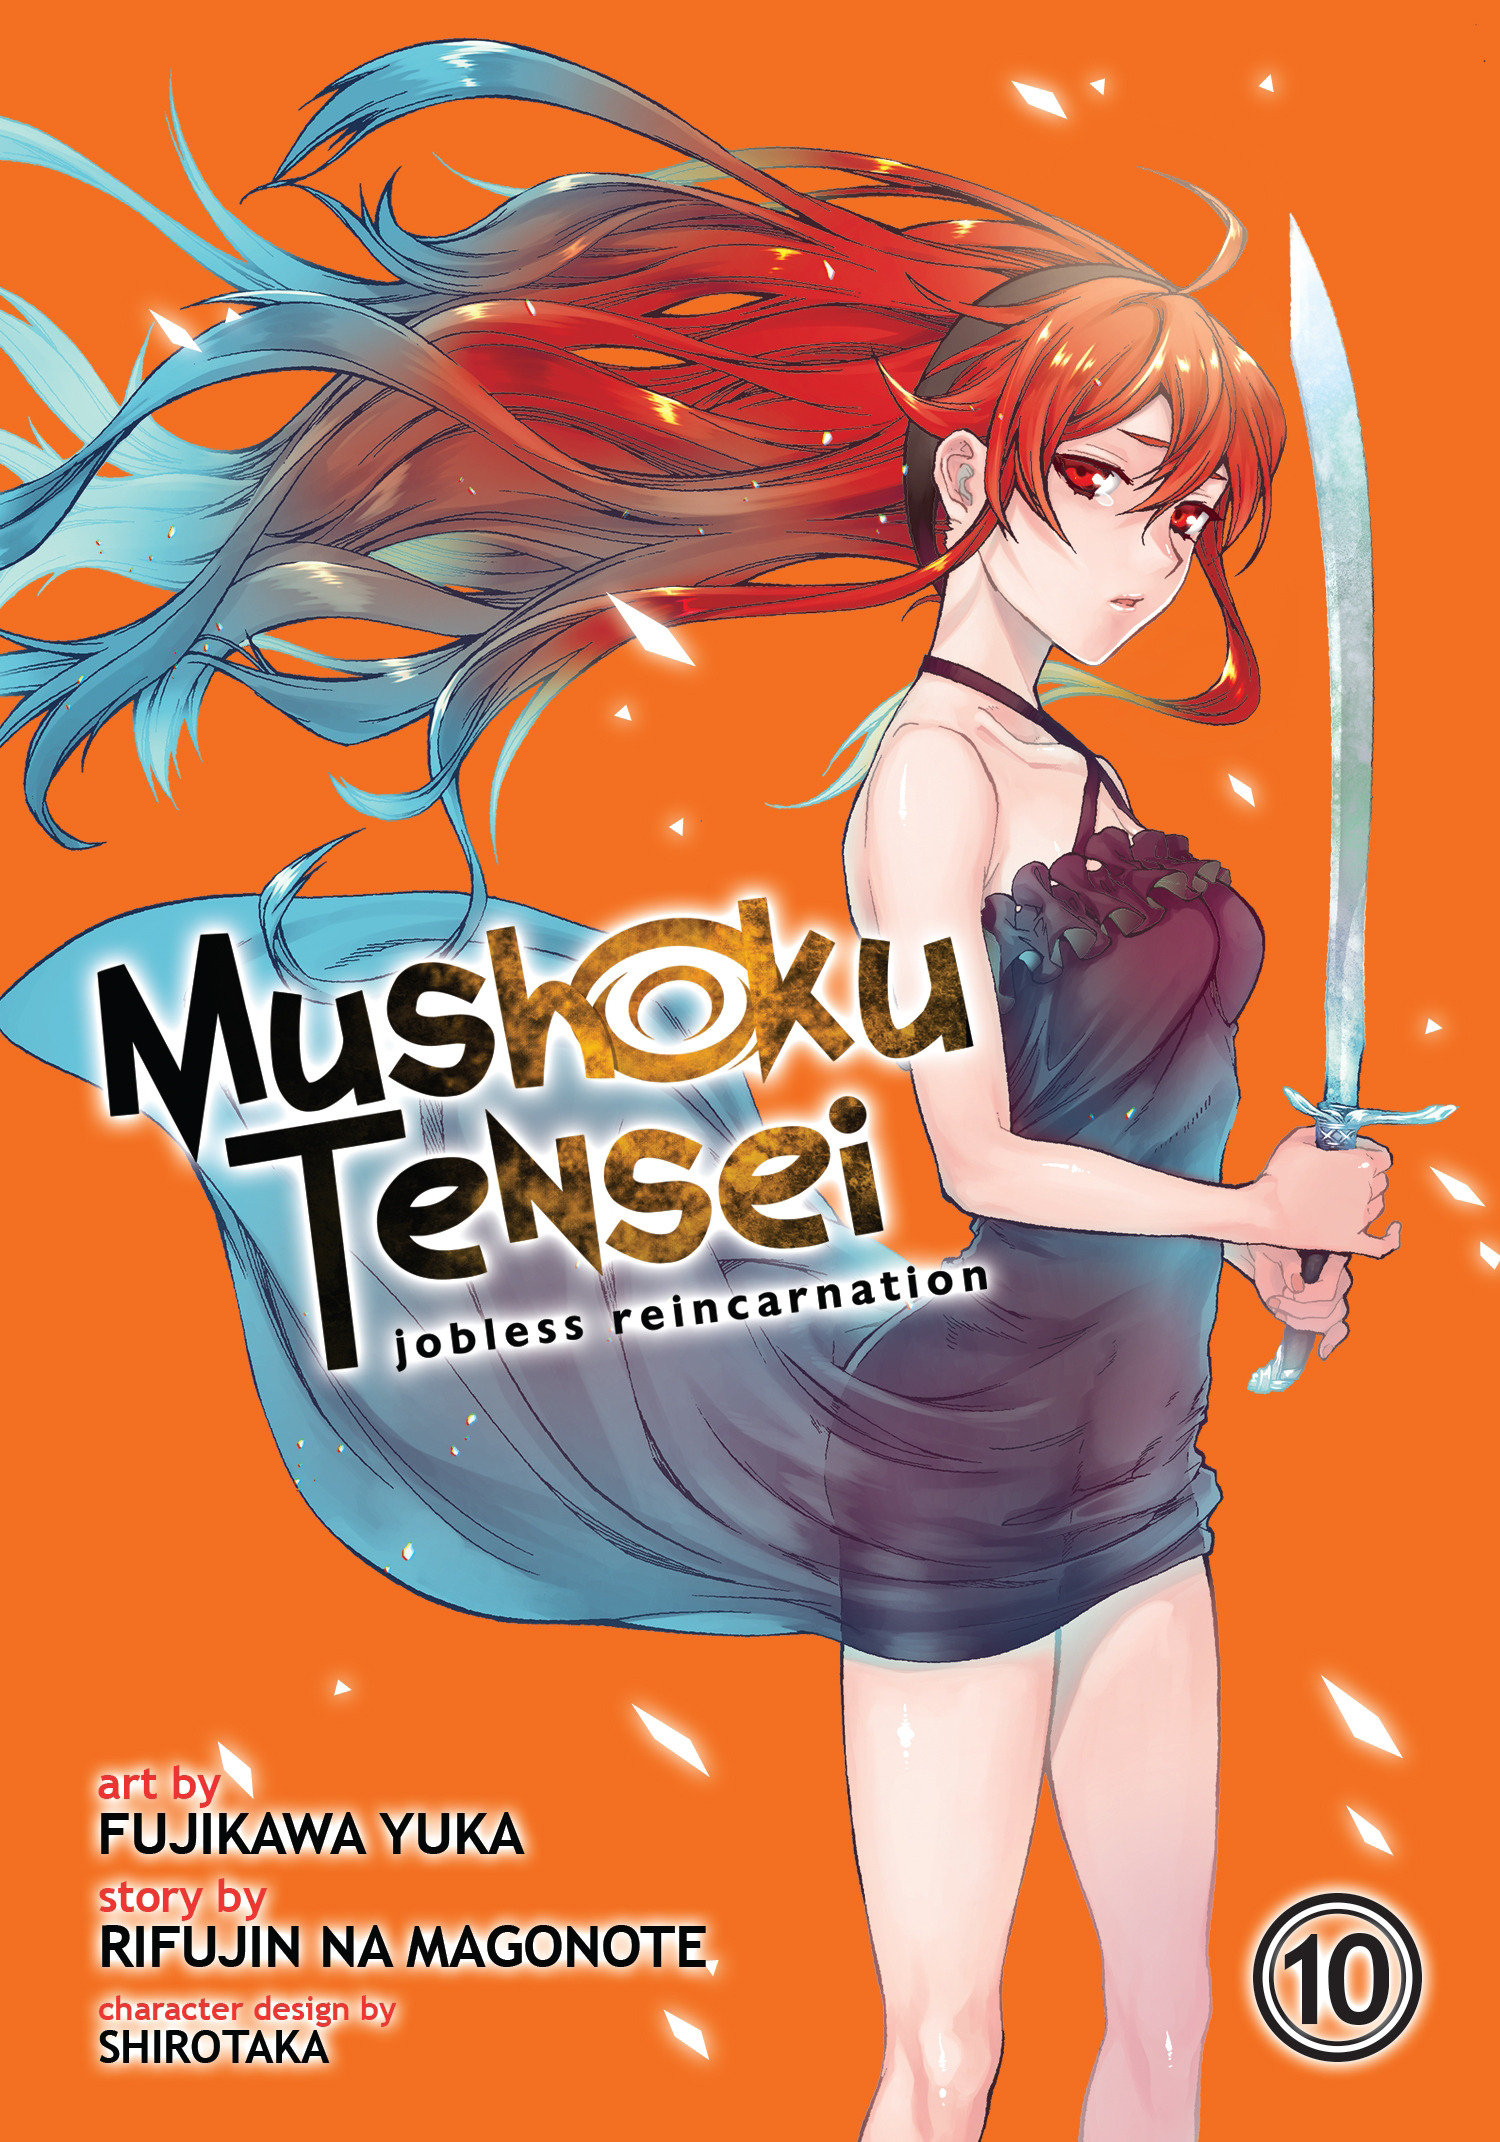 Mangá Mushoku Tensei Uma Segunda Chance Volume 04